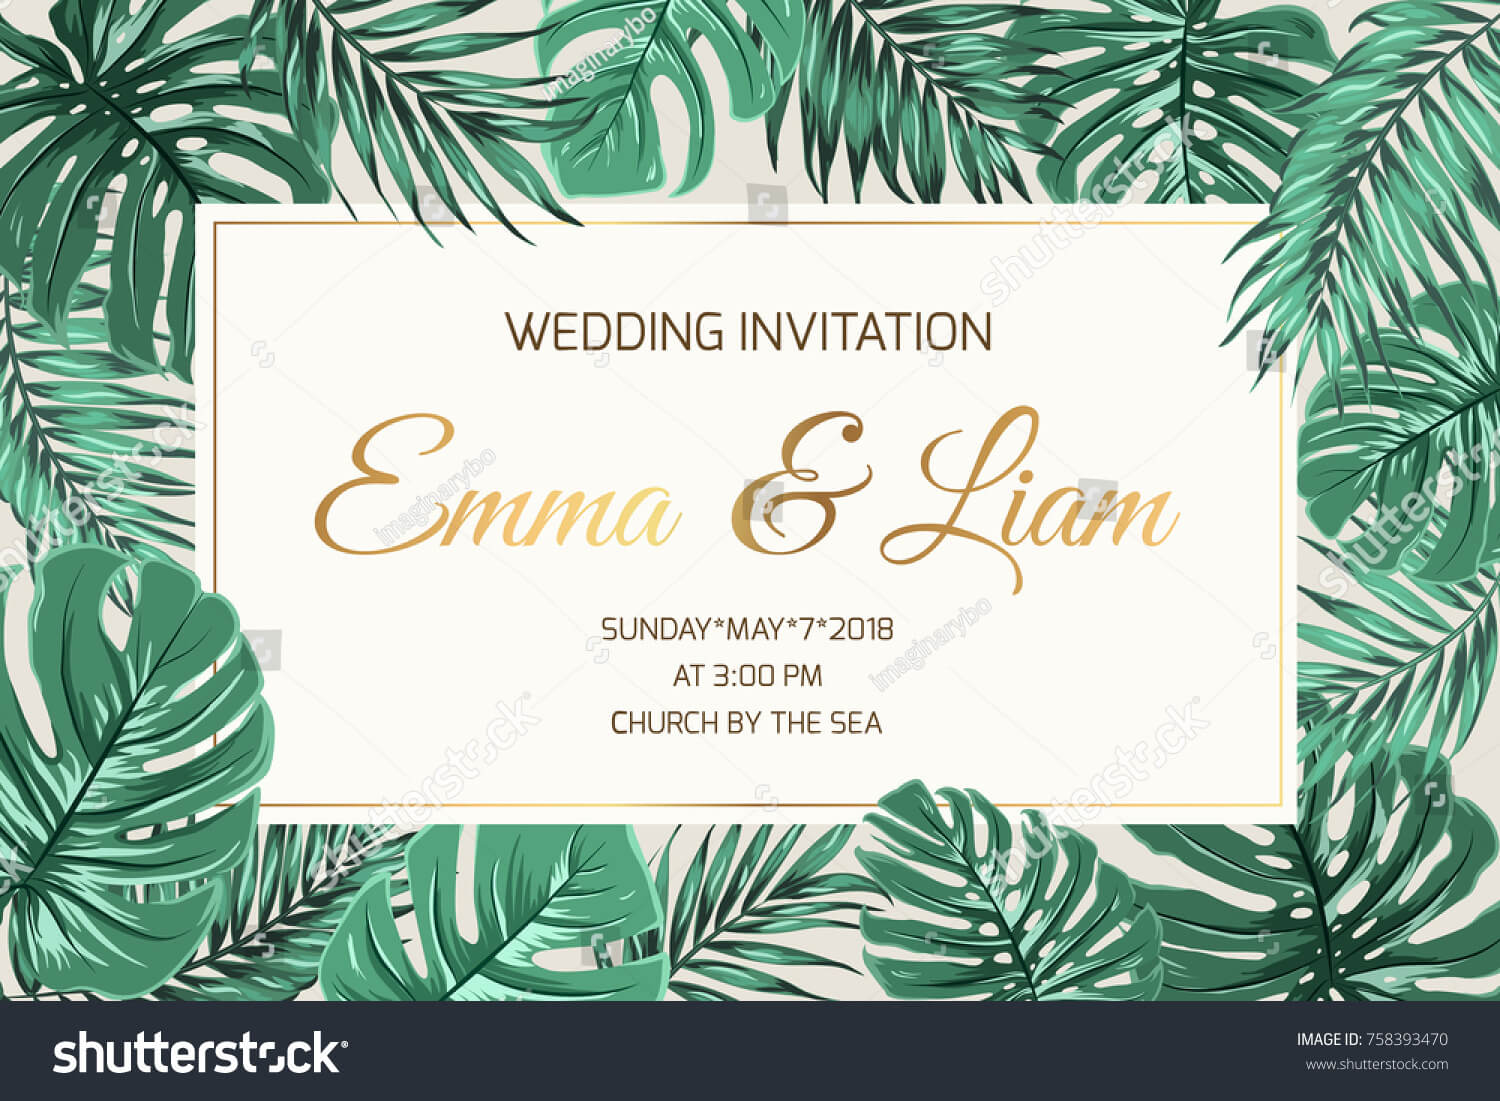 Wedding Marriage Event Invitation Card Template Stock Vector Throughout Event Invitation Card Template